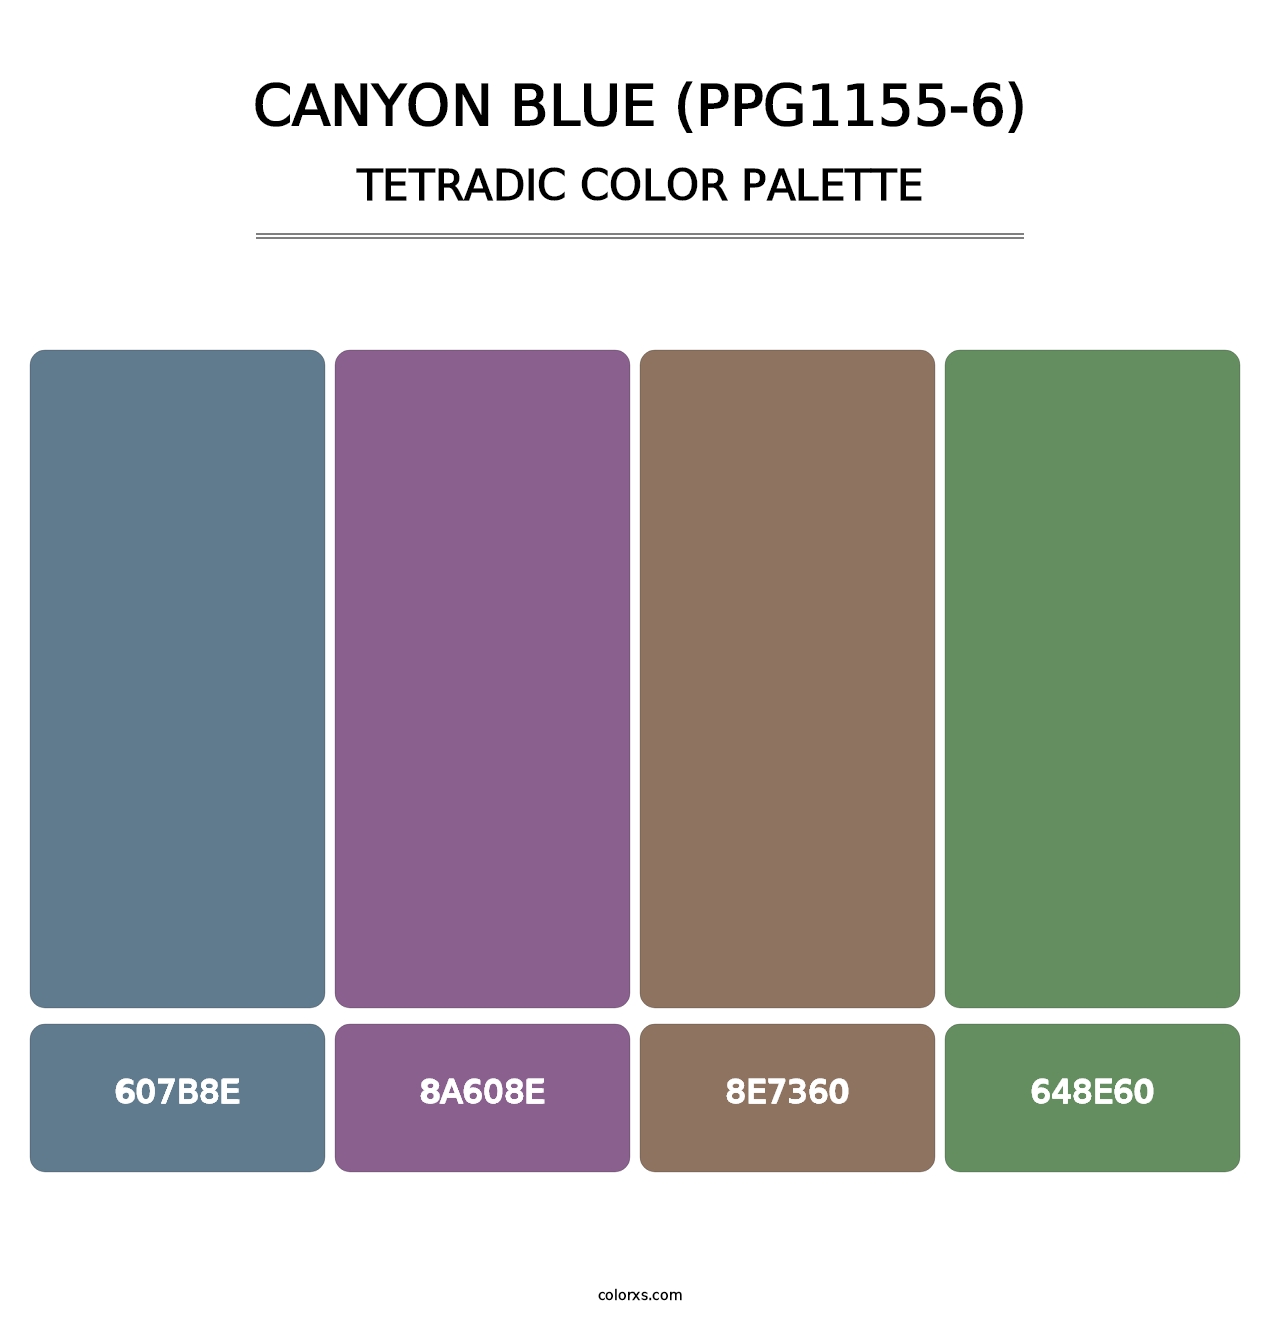 Canyon Blue (PPG1155-6) - Tetradic Color Palette